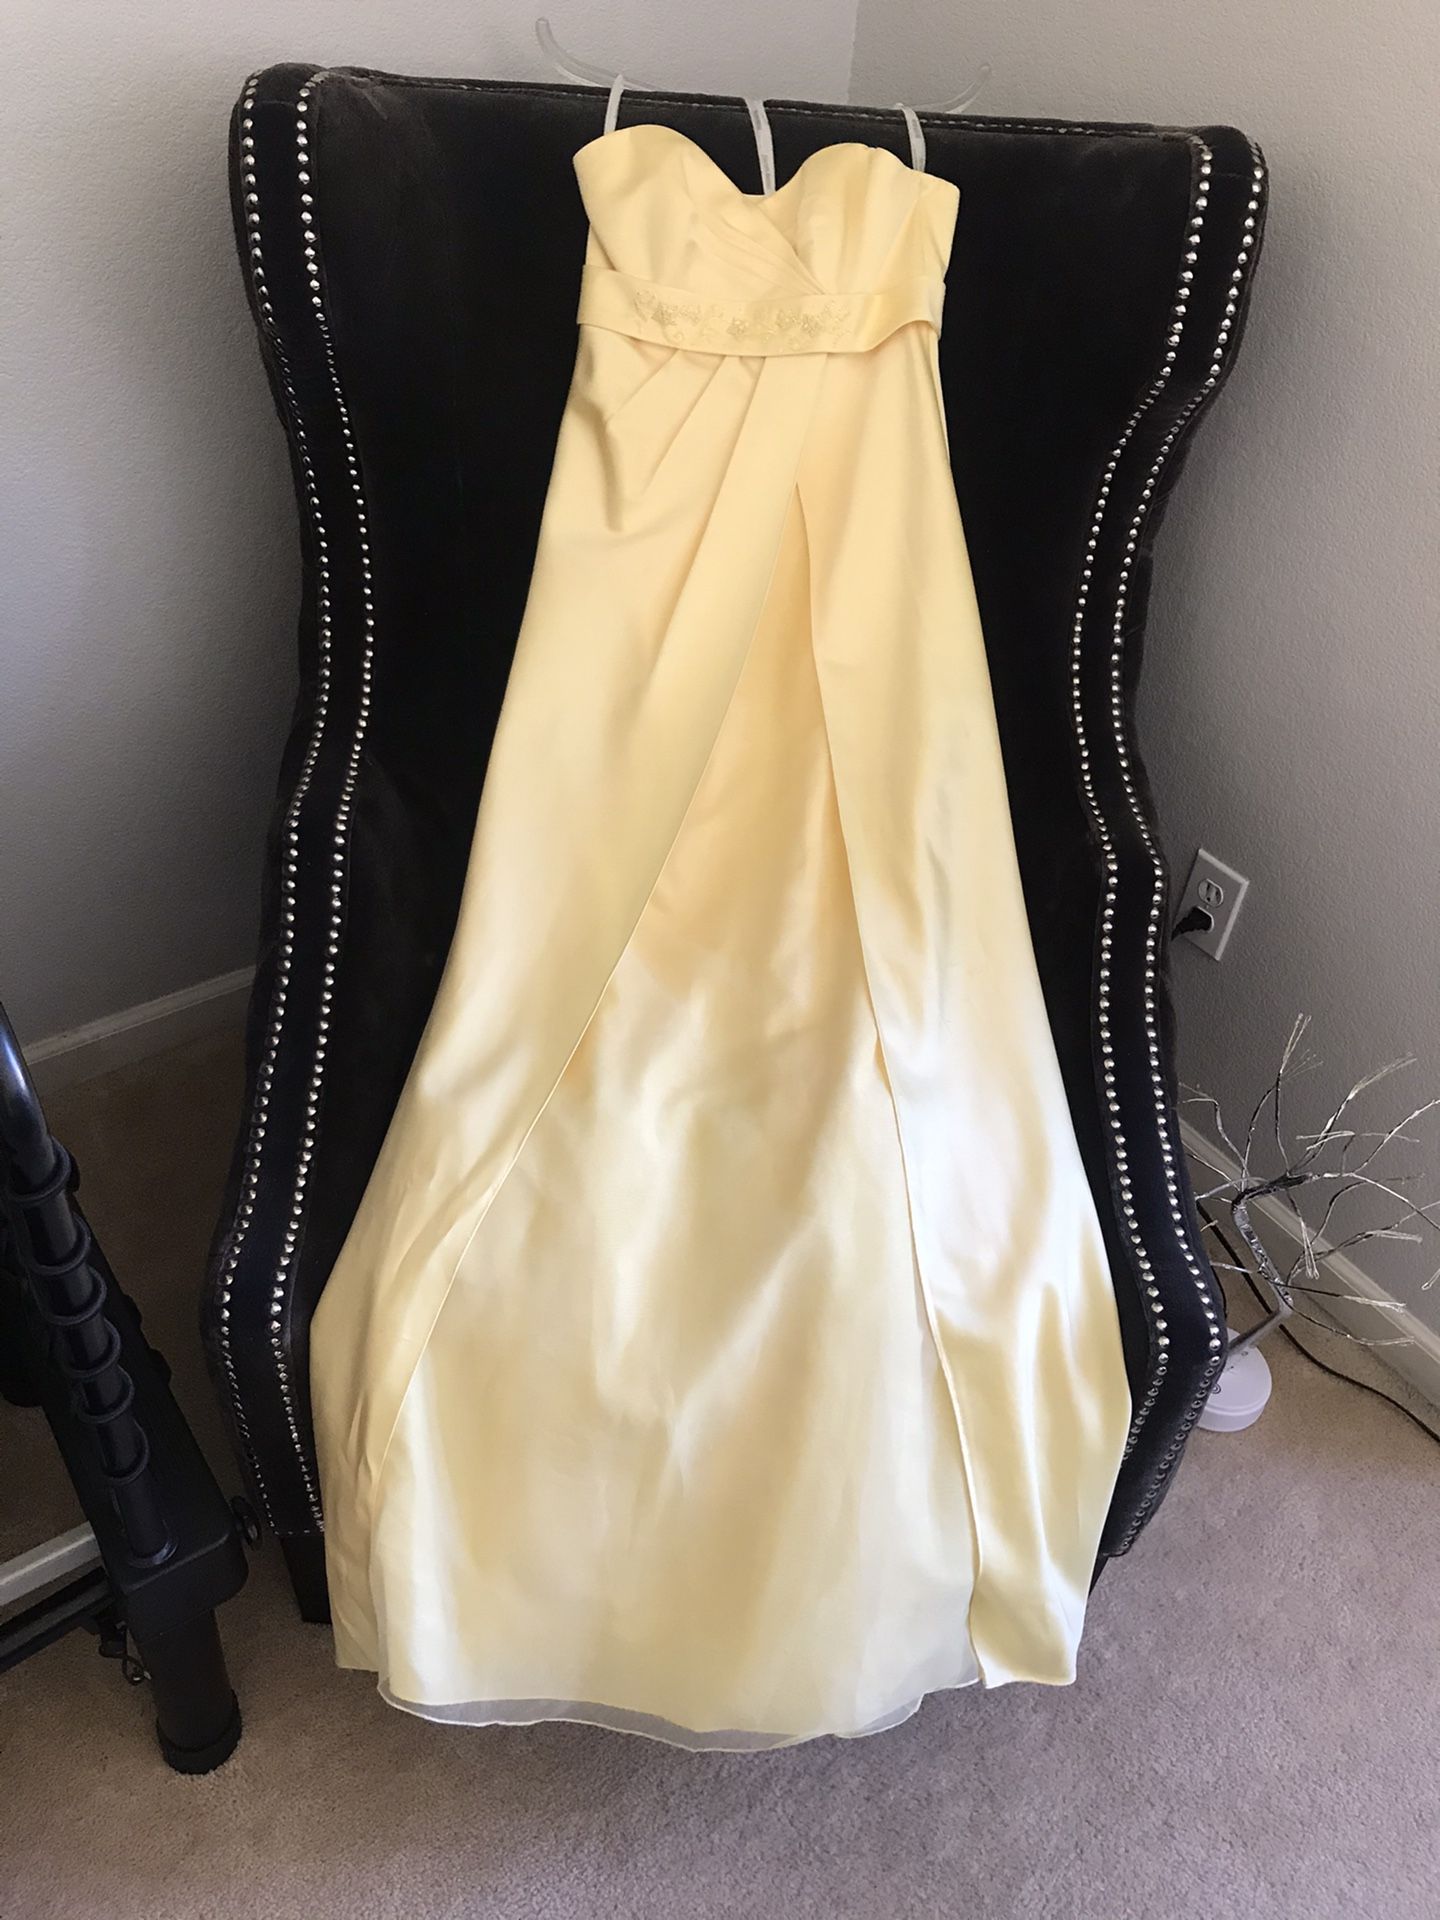 Sz 2 Yellow Strapless Dress